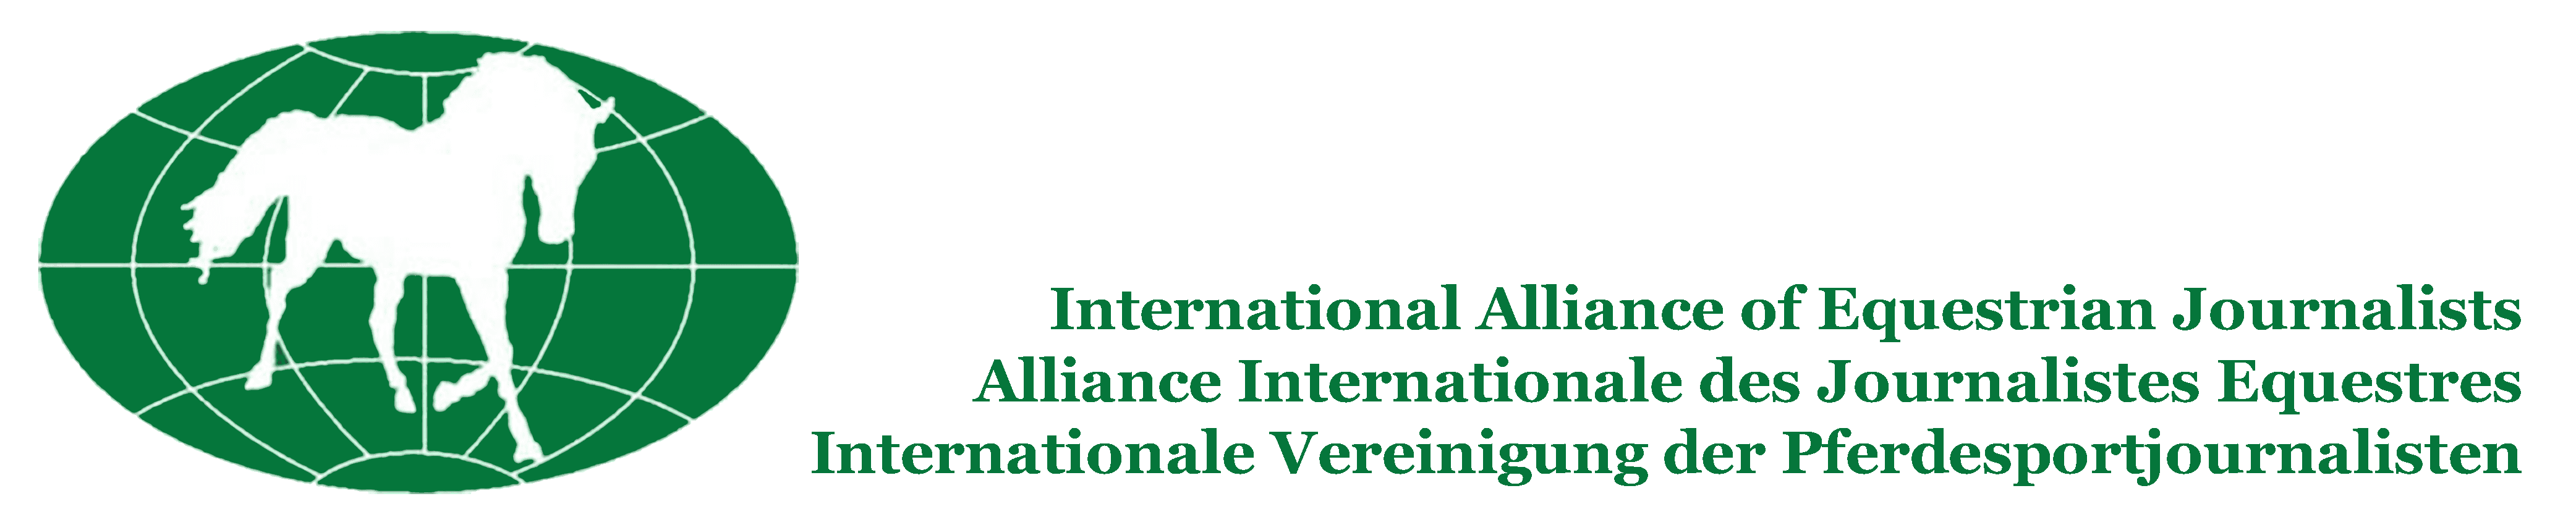 International Alliance of Equestrian Journalists